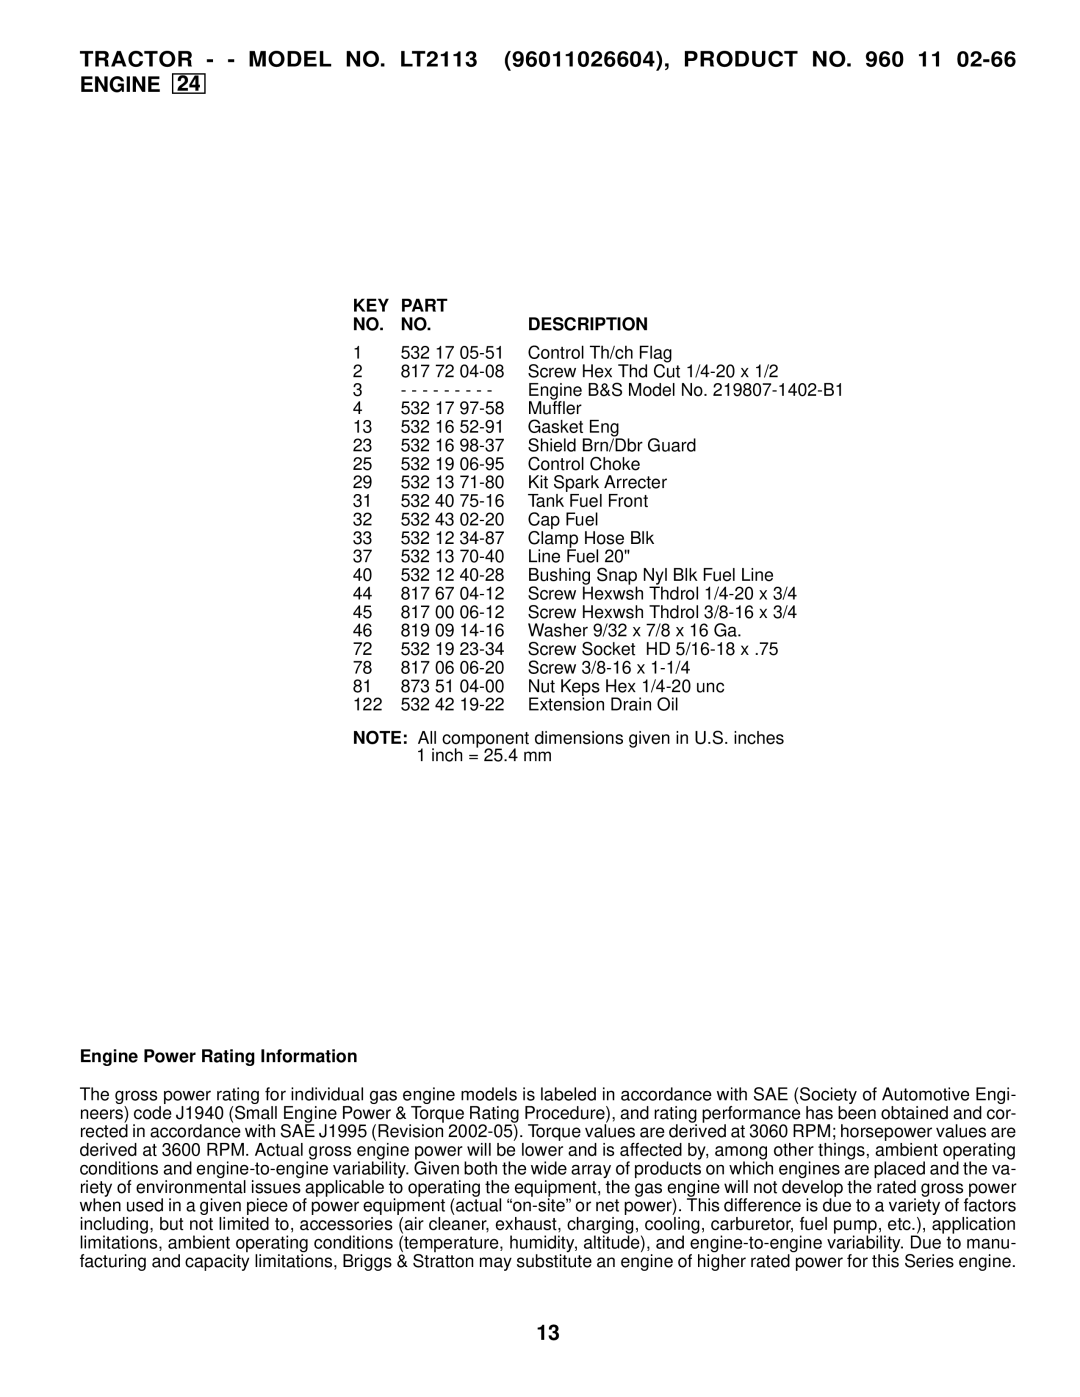 Jonsered LT2113 manual Engine Power Rating Information, Part, Description 